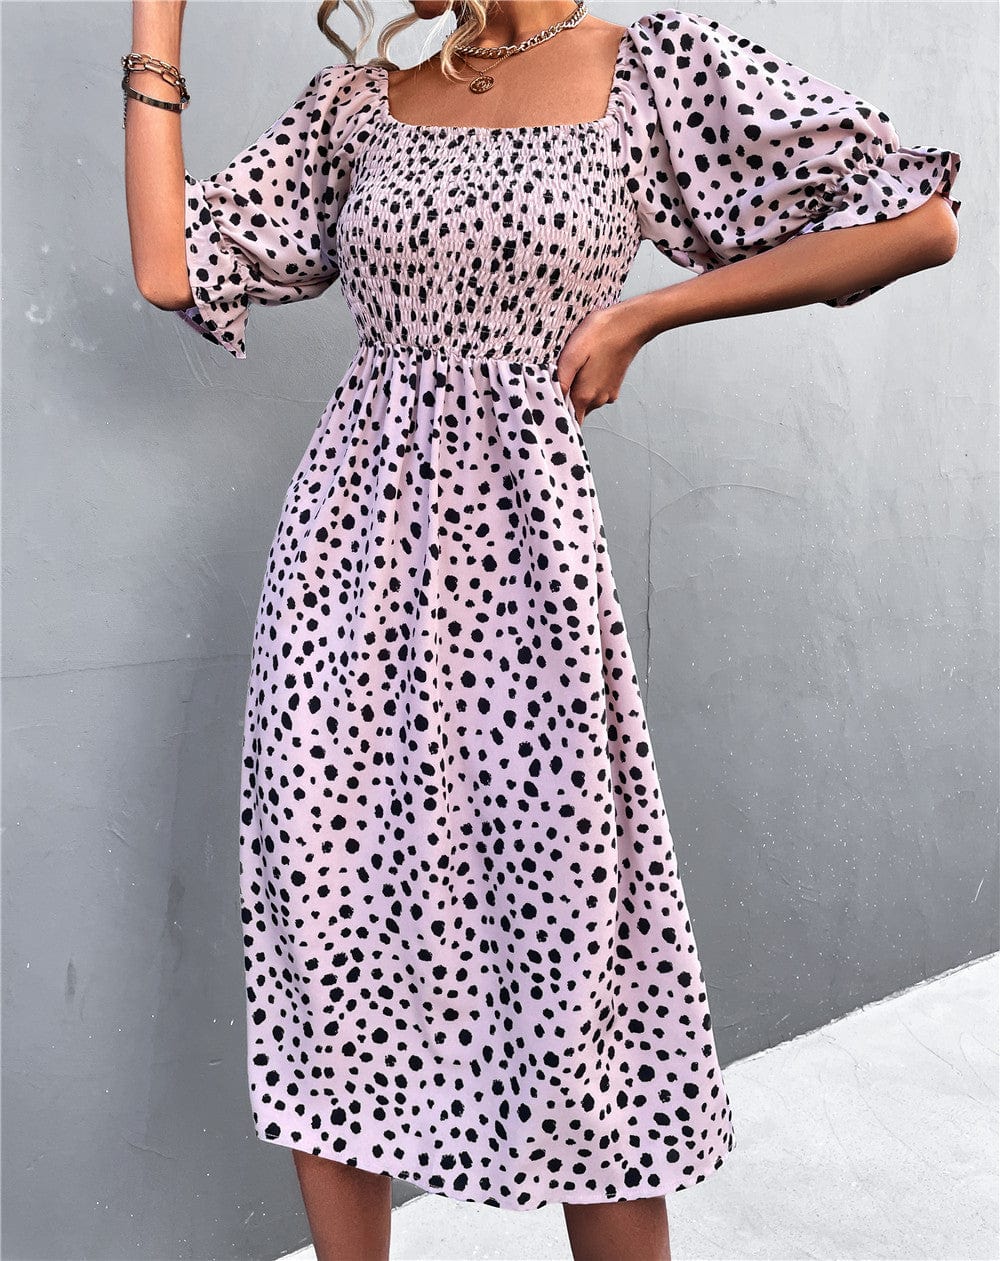 Cheetah Square Neck Dress